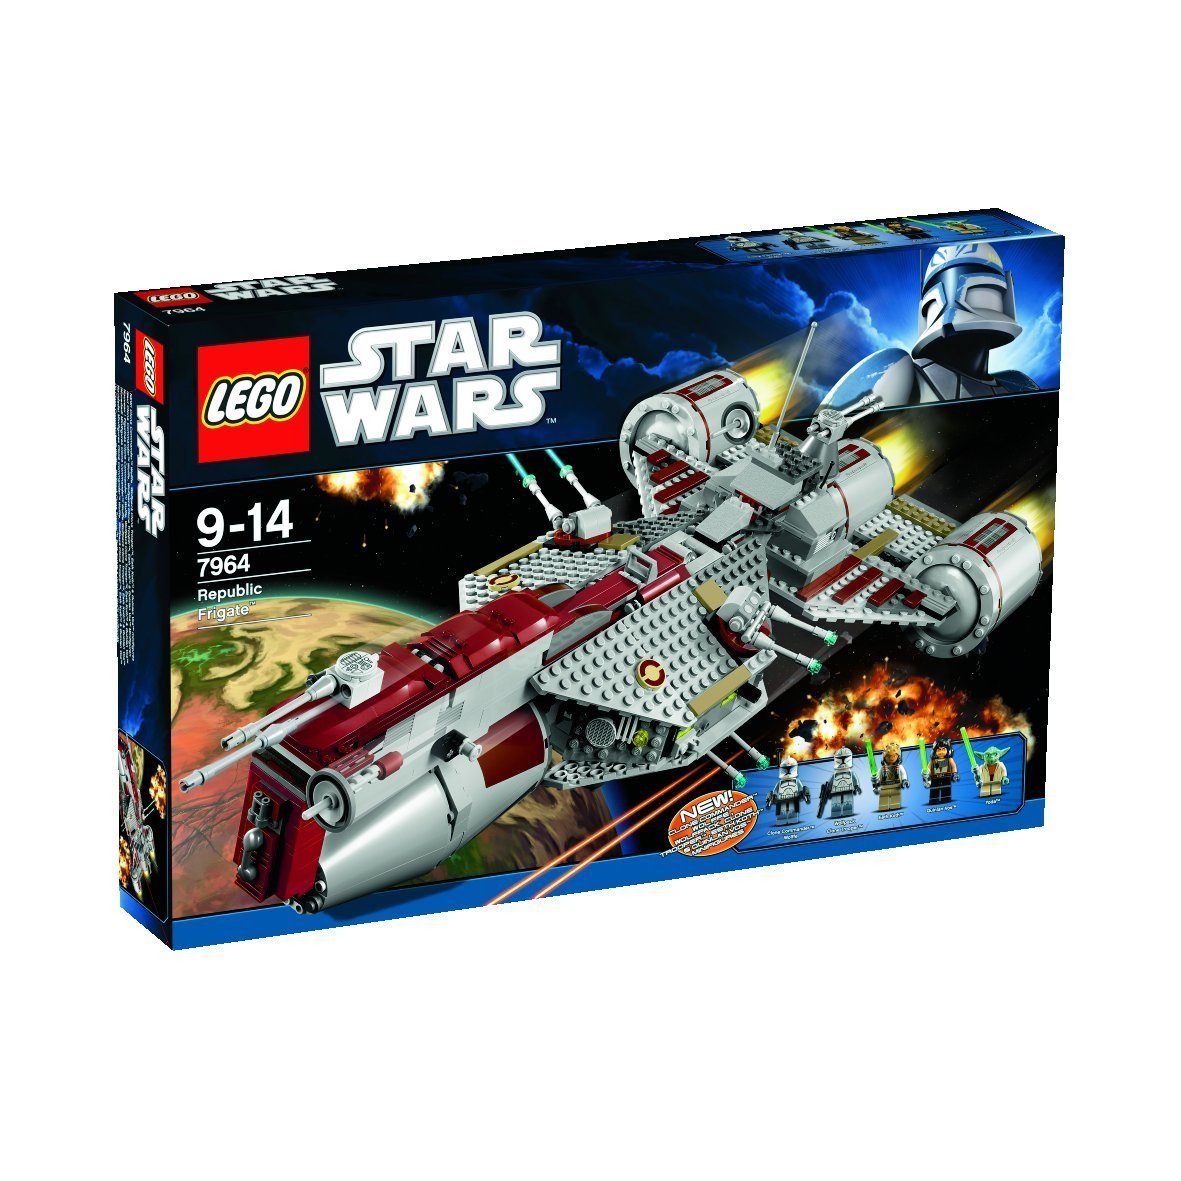 BRAND NEW STAR WARS LEGO #7964 REPUBLIC FRIGATE